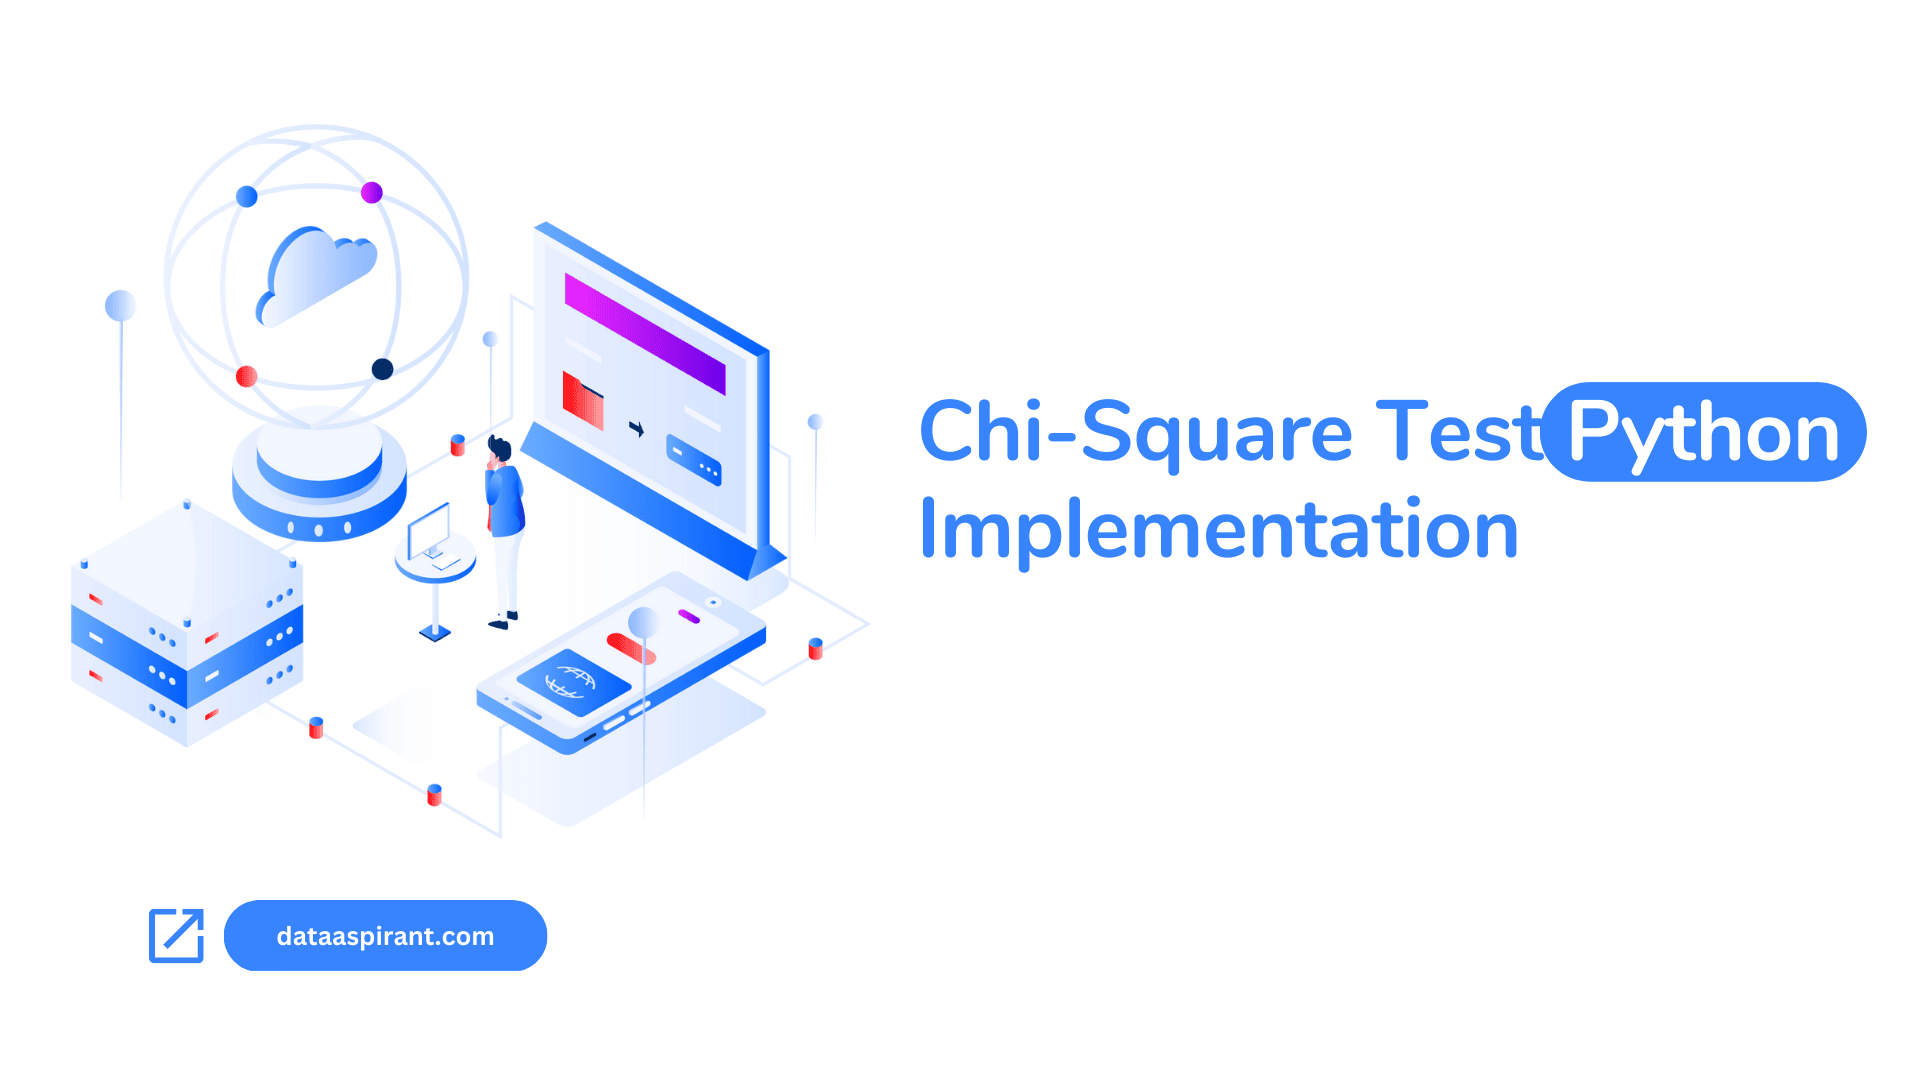 Chi-Square Test Python Implementation